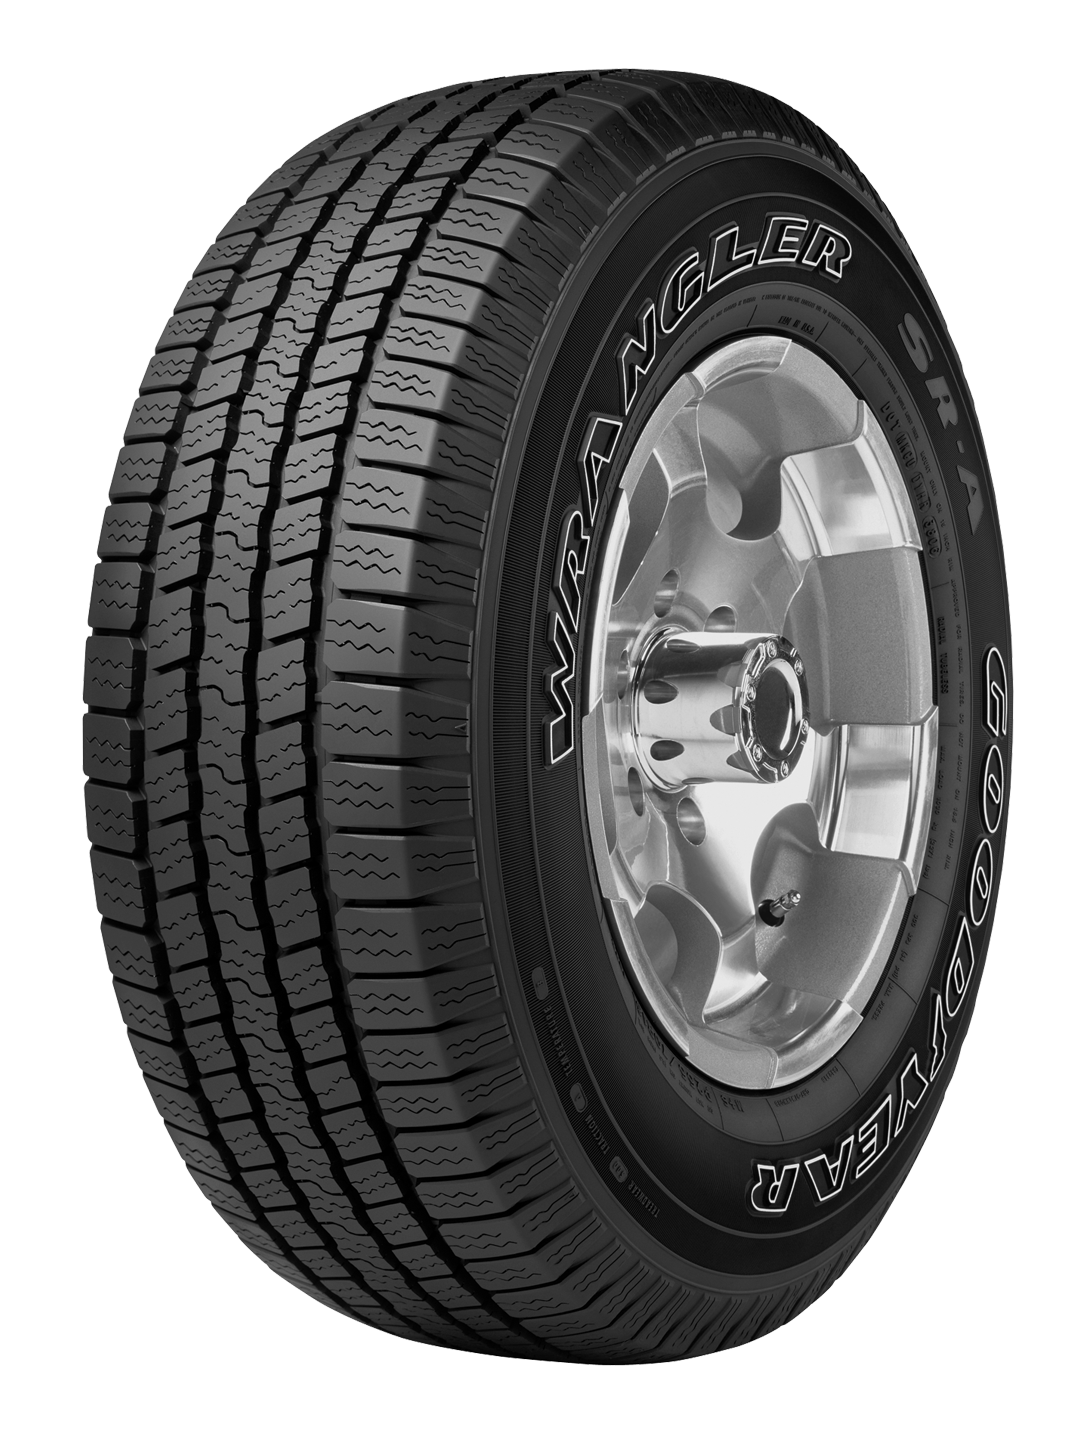 GOODYEAR WRANGLER SR-A(P) 215 / 70 R 16 - Appalacian Tire Products &  Service Appalacian Tire Products & Service